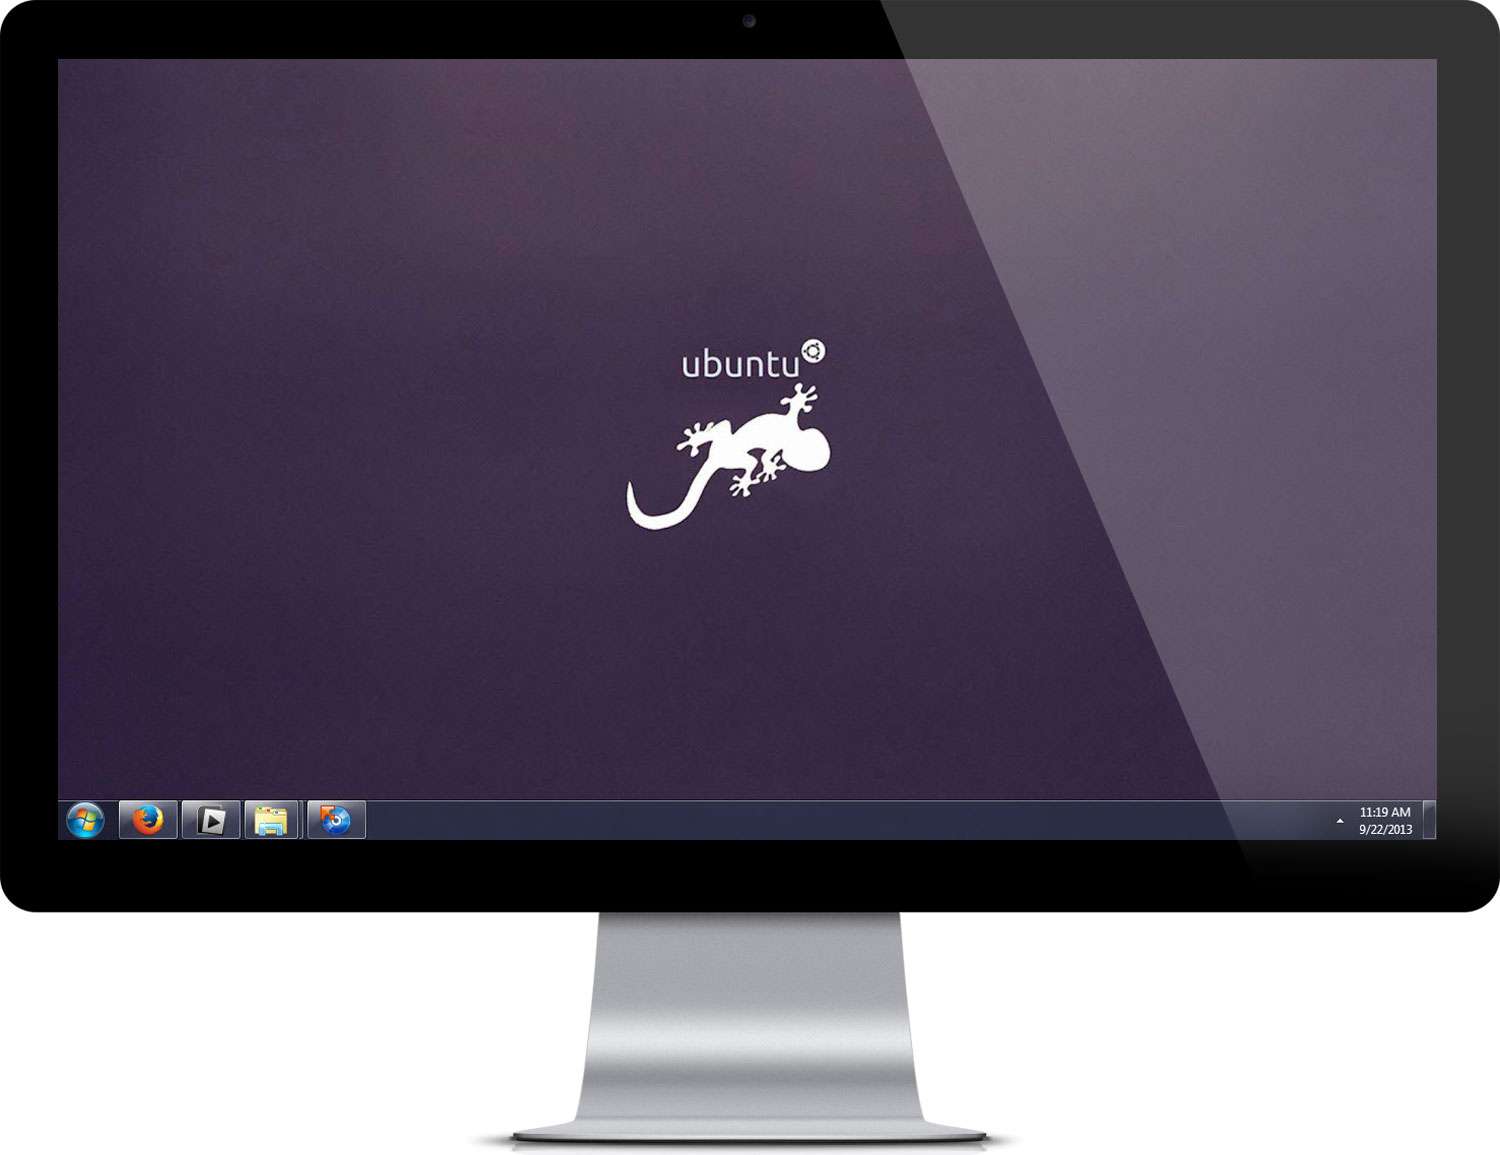 Ubuntu 1310 Theme For Windows 7 And Windows 8 1500x1155